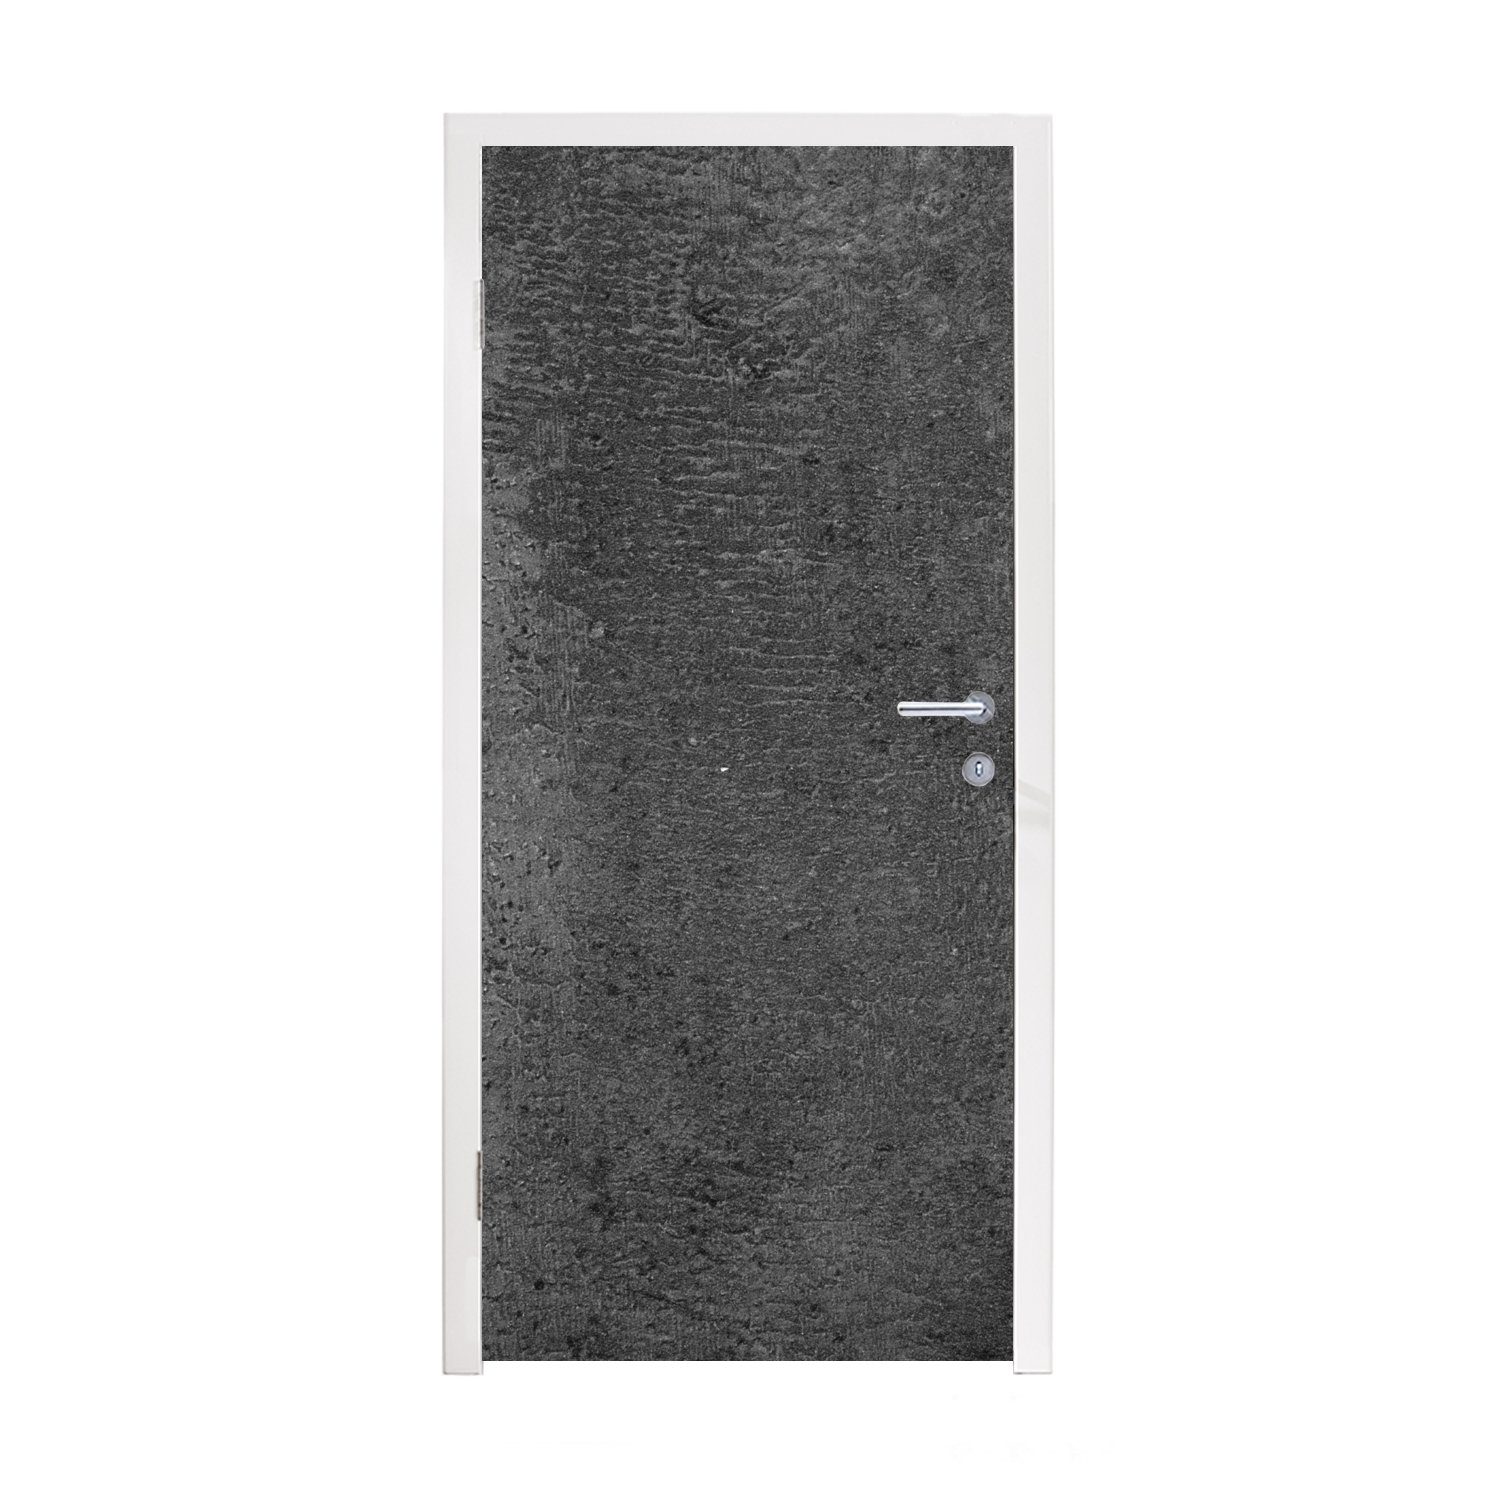 MuchoWow Türtapete Strukturiert - Beton - Grau - Industriell - Rustikal, Matt, bedruckt, (1 St), Fototapete für Tür, Türaufkleber, 75x205 cm